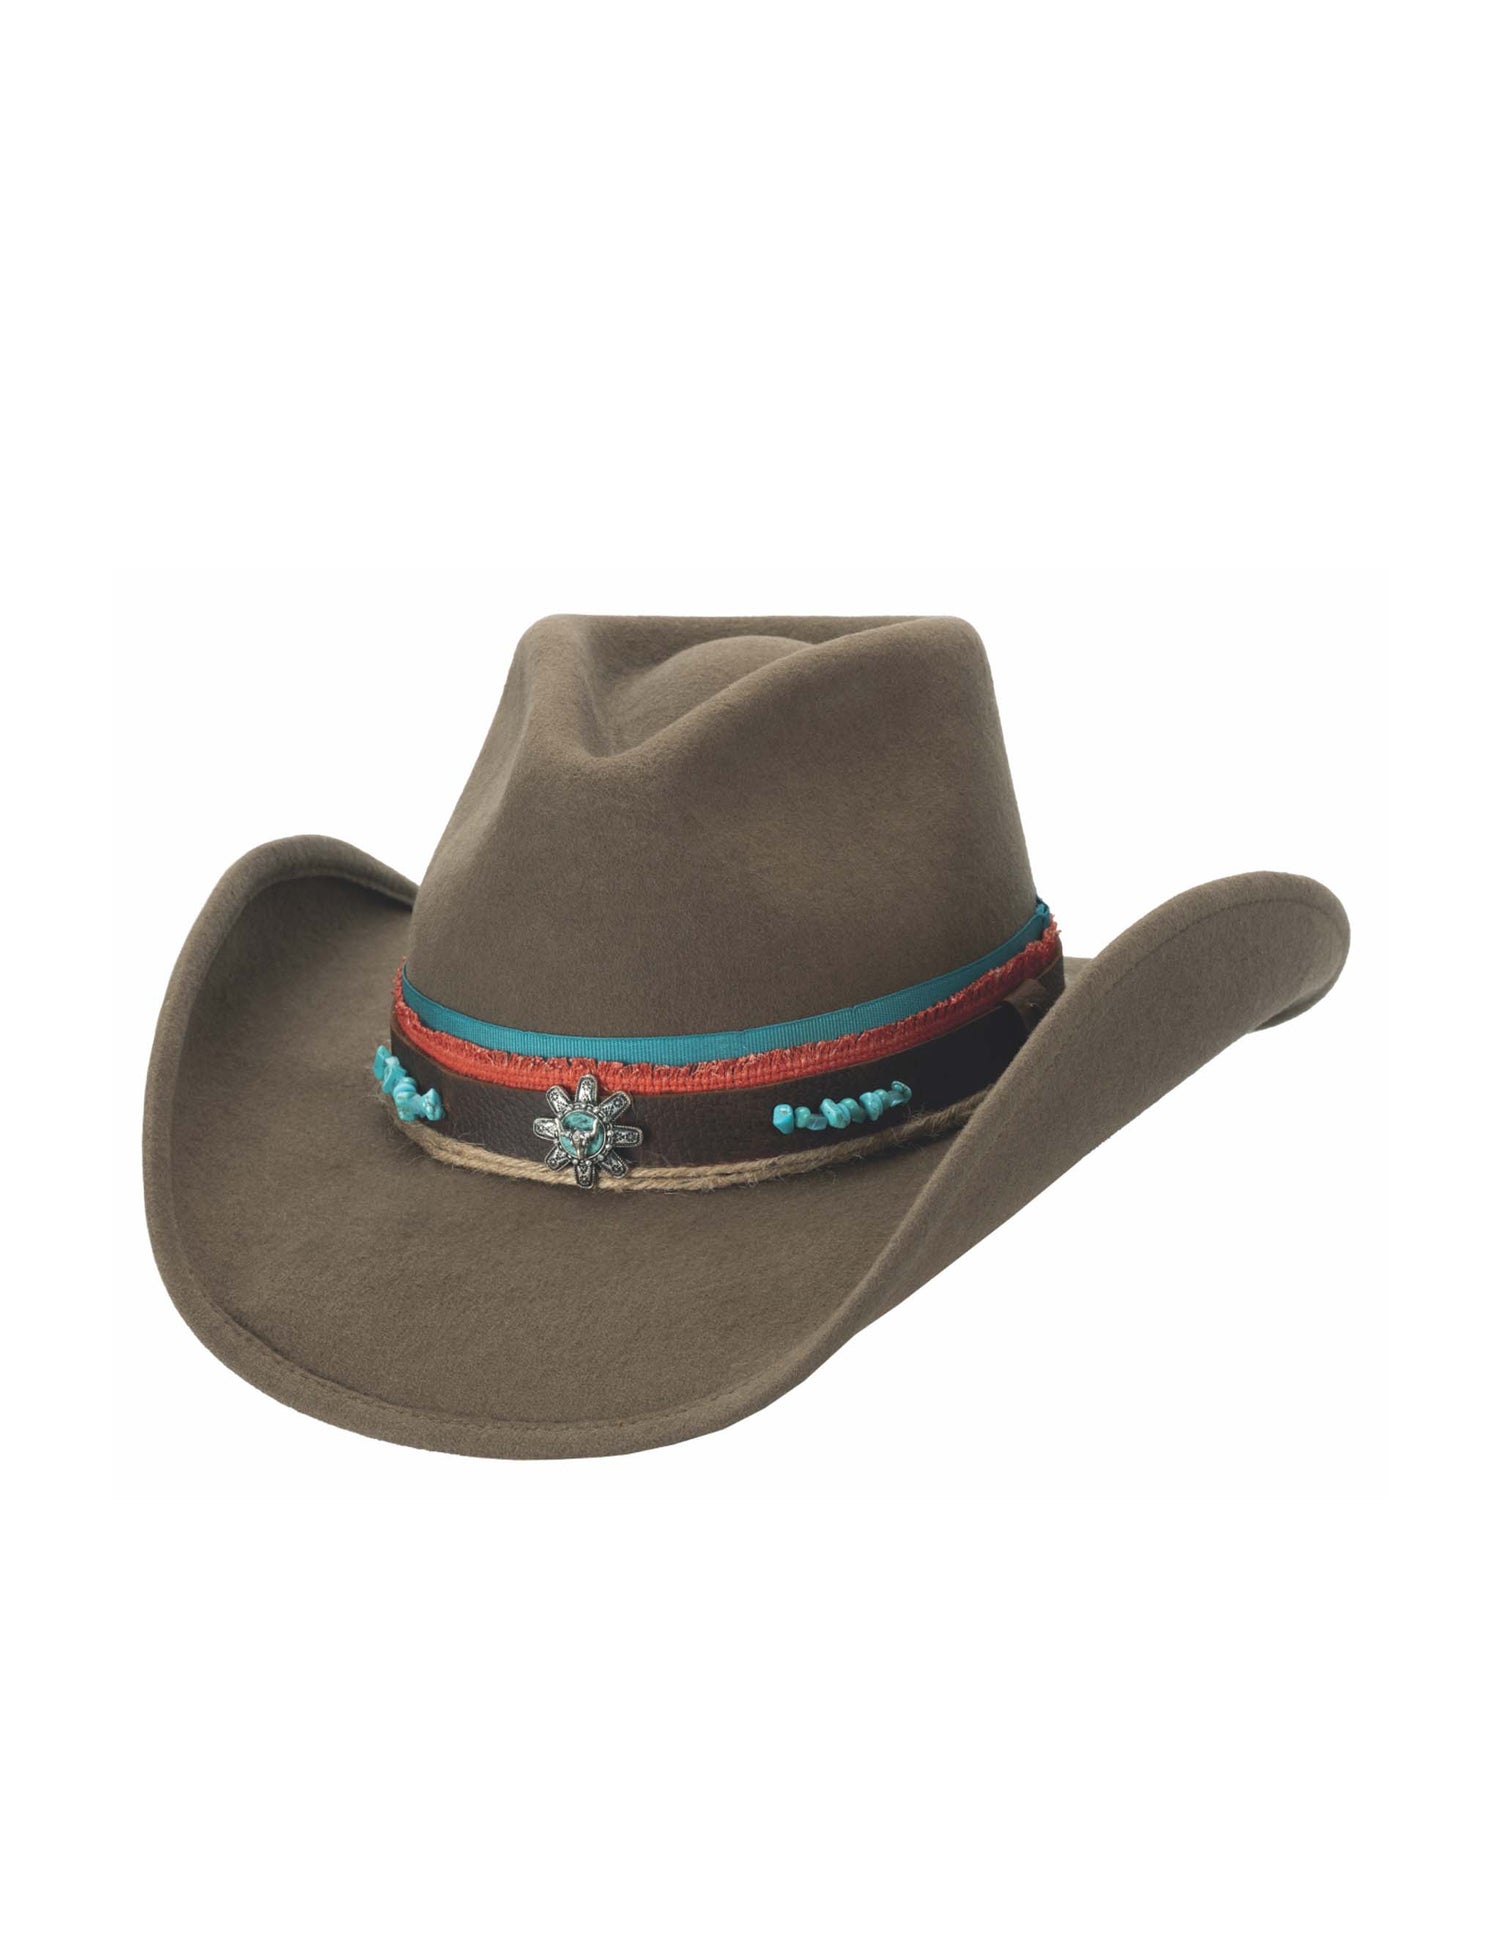 Bullhide Forever After All Cowboy Hat